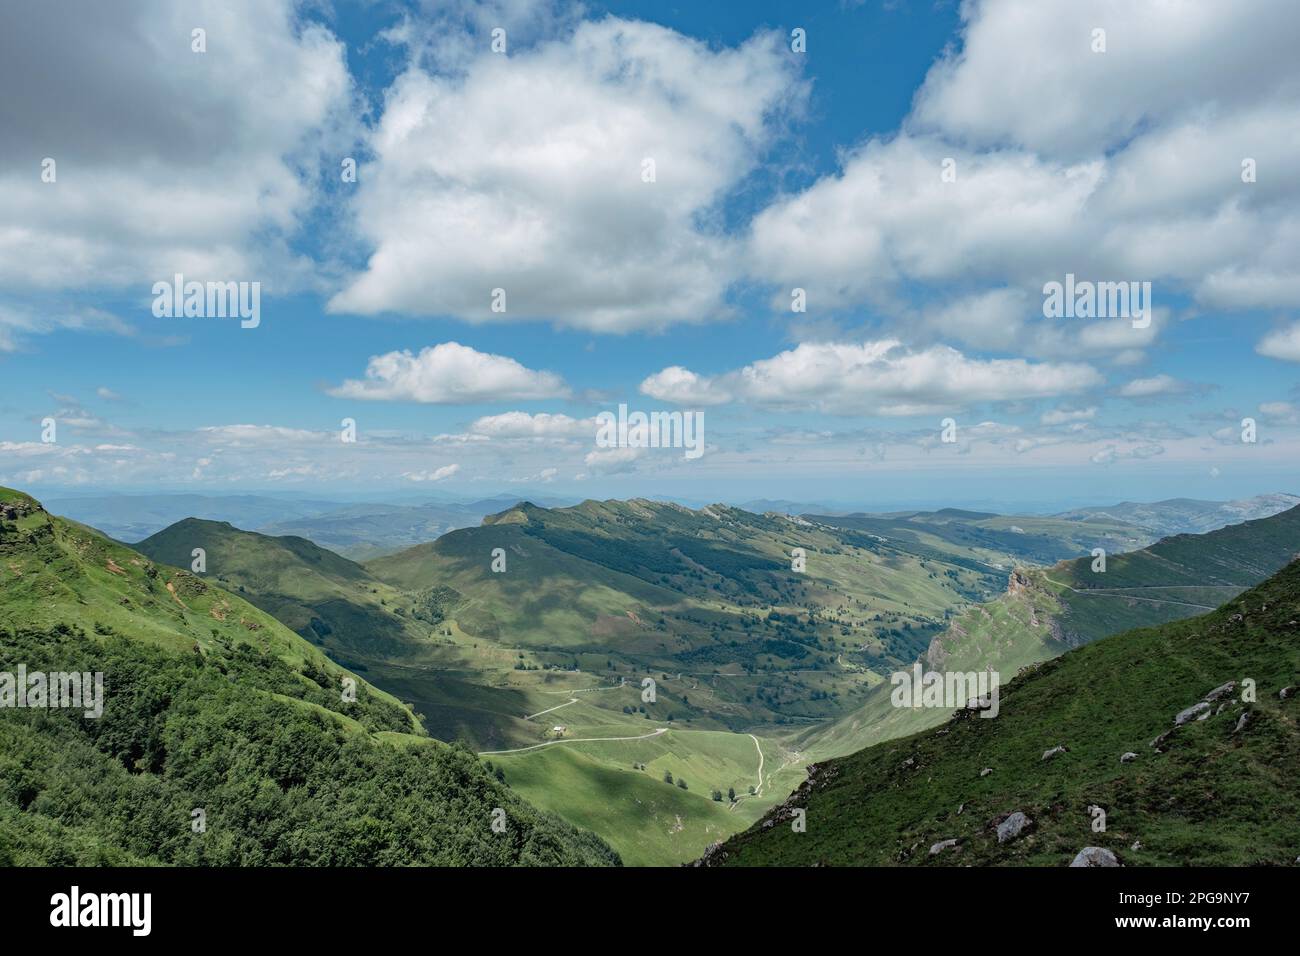 Vista della verde valle in montagna, la valle di Miera, Valles pasiegos, Cantabria, Spagna Foto Stock